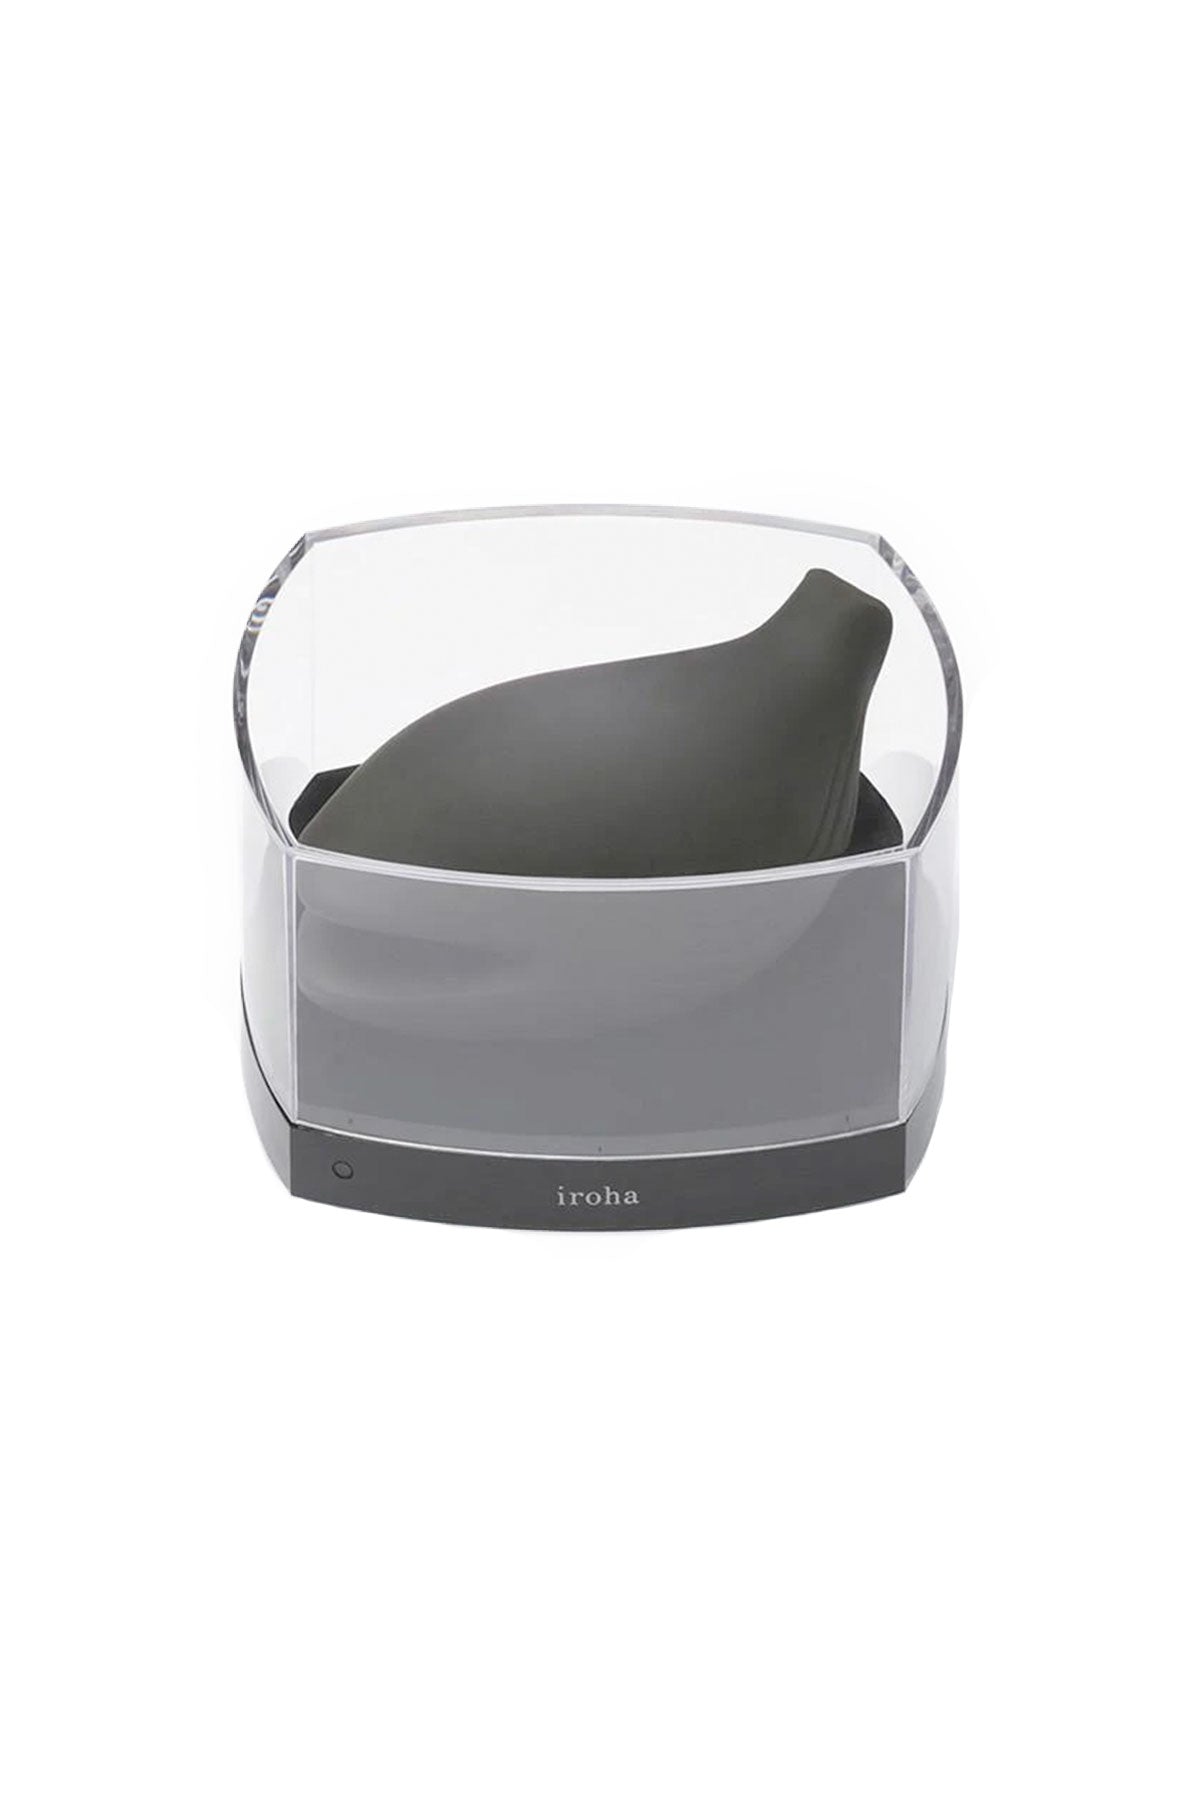  Iroha Plus Clitoral Vibrator By Tenga Box